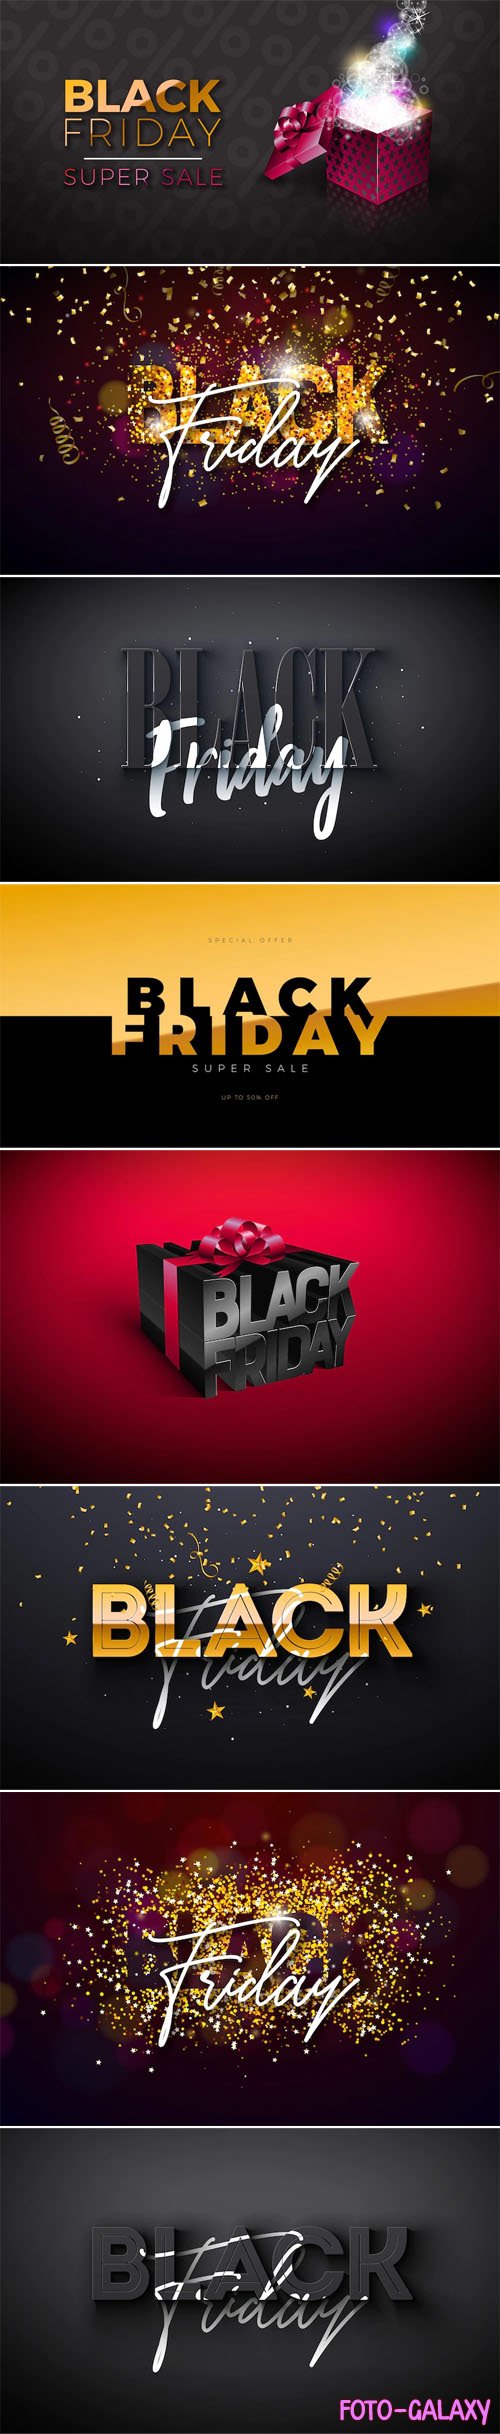 Black Friday Sales - 3D Lettering Vector Templates [Vol.1]